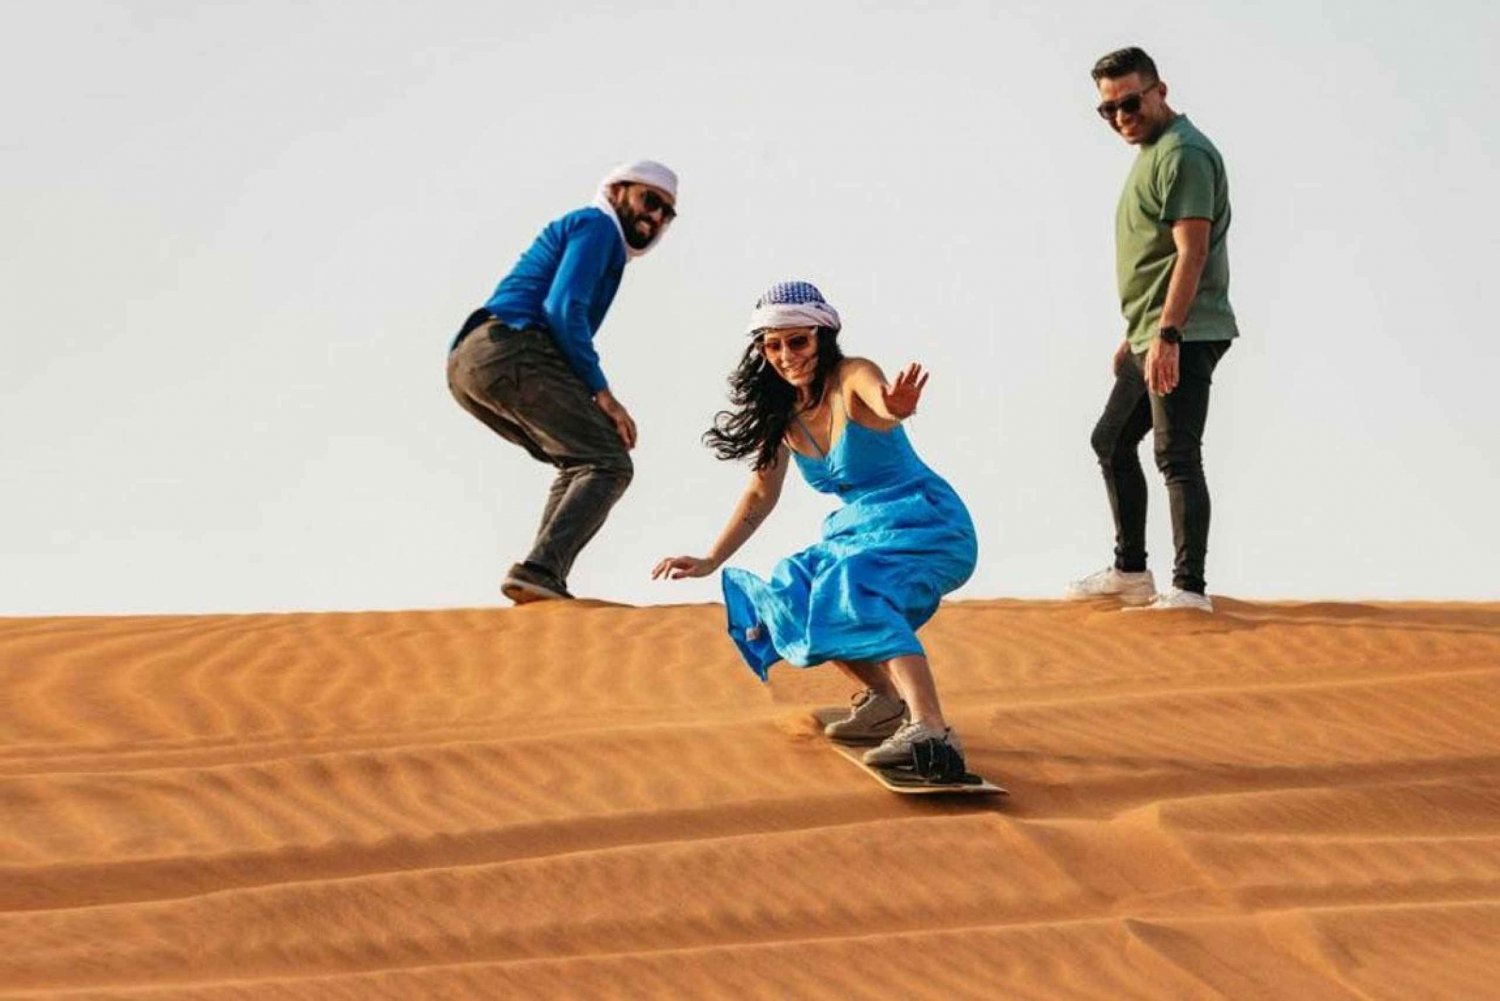 Dubaï : Rallyeeee dans les dos dunes chameaux, sandboarding et Red Dune Bashing